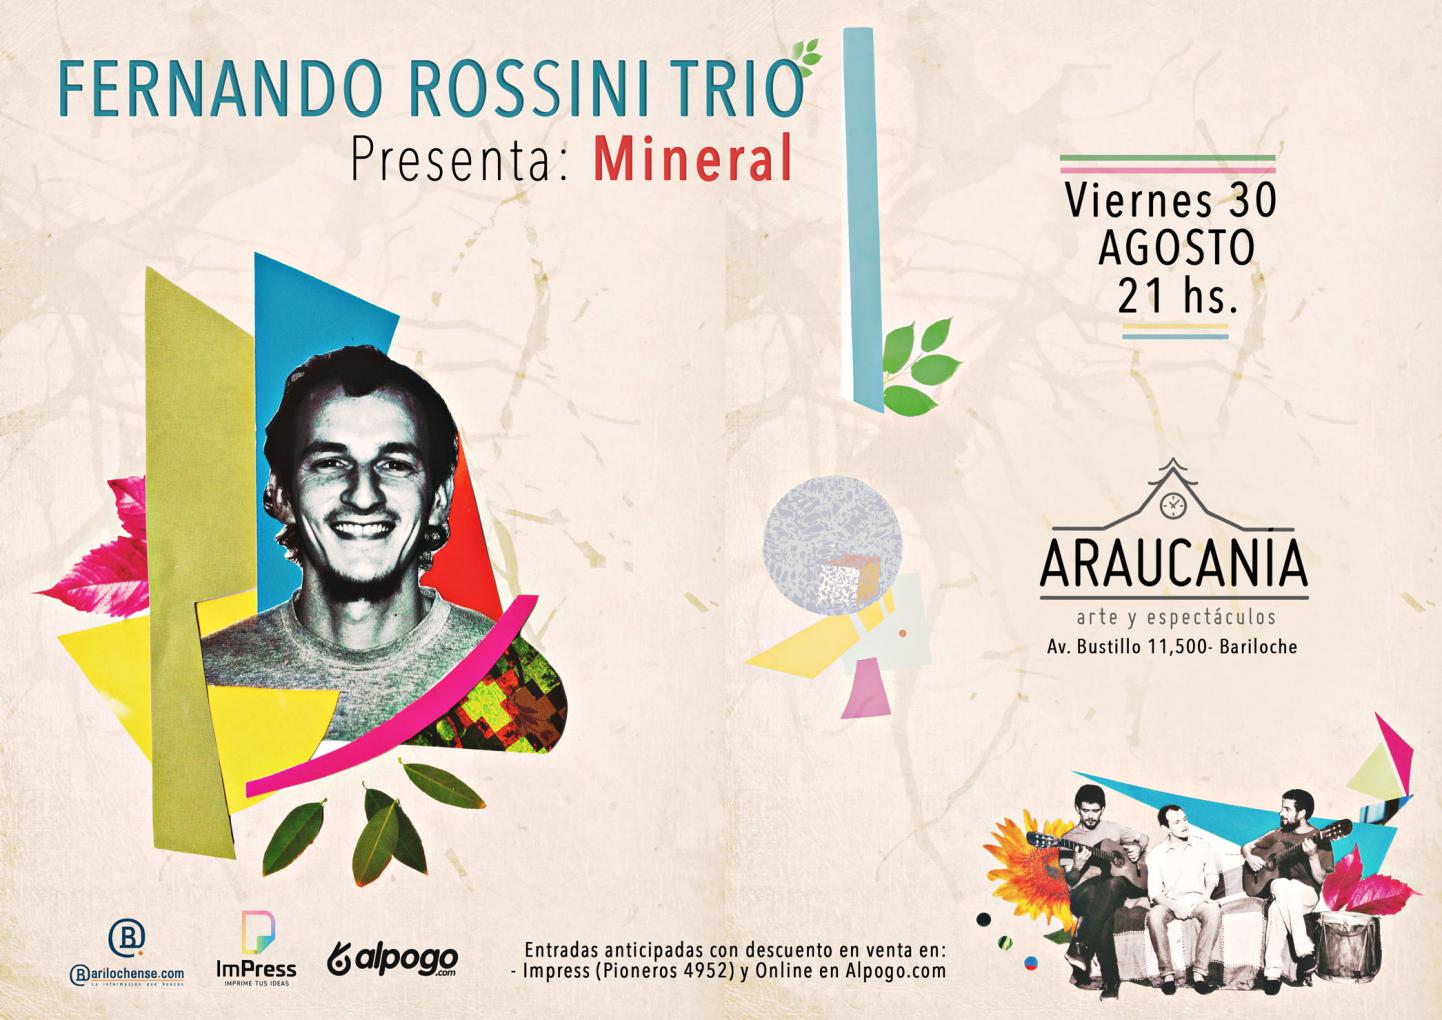 El talentoso m&uacute;sico tucumano Fernando Rossini vuelve a  Bariloche para presentar &#147;Mineral&#148;